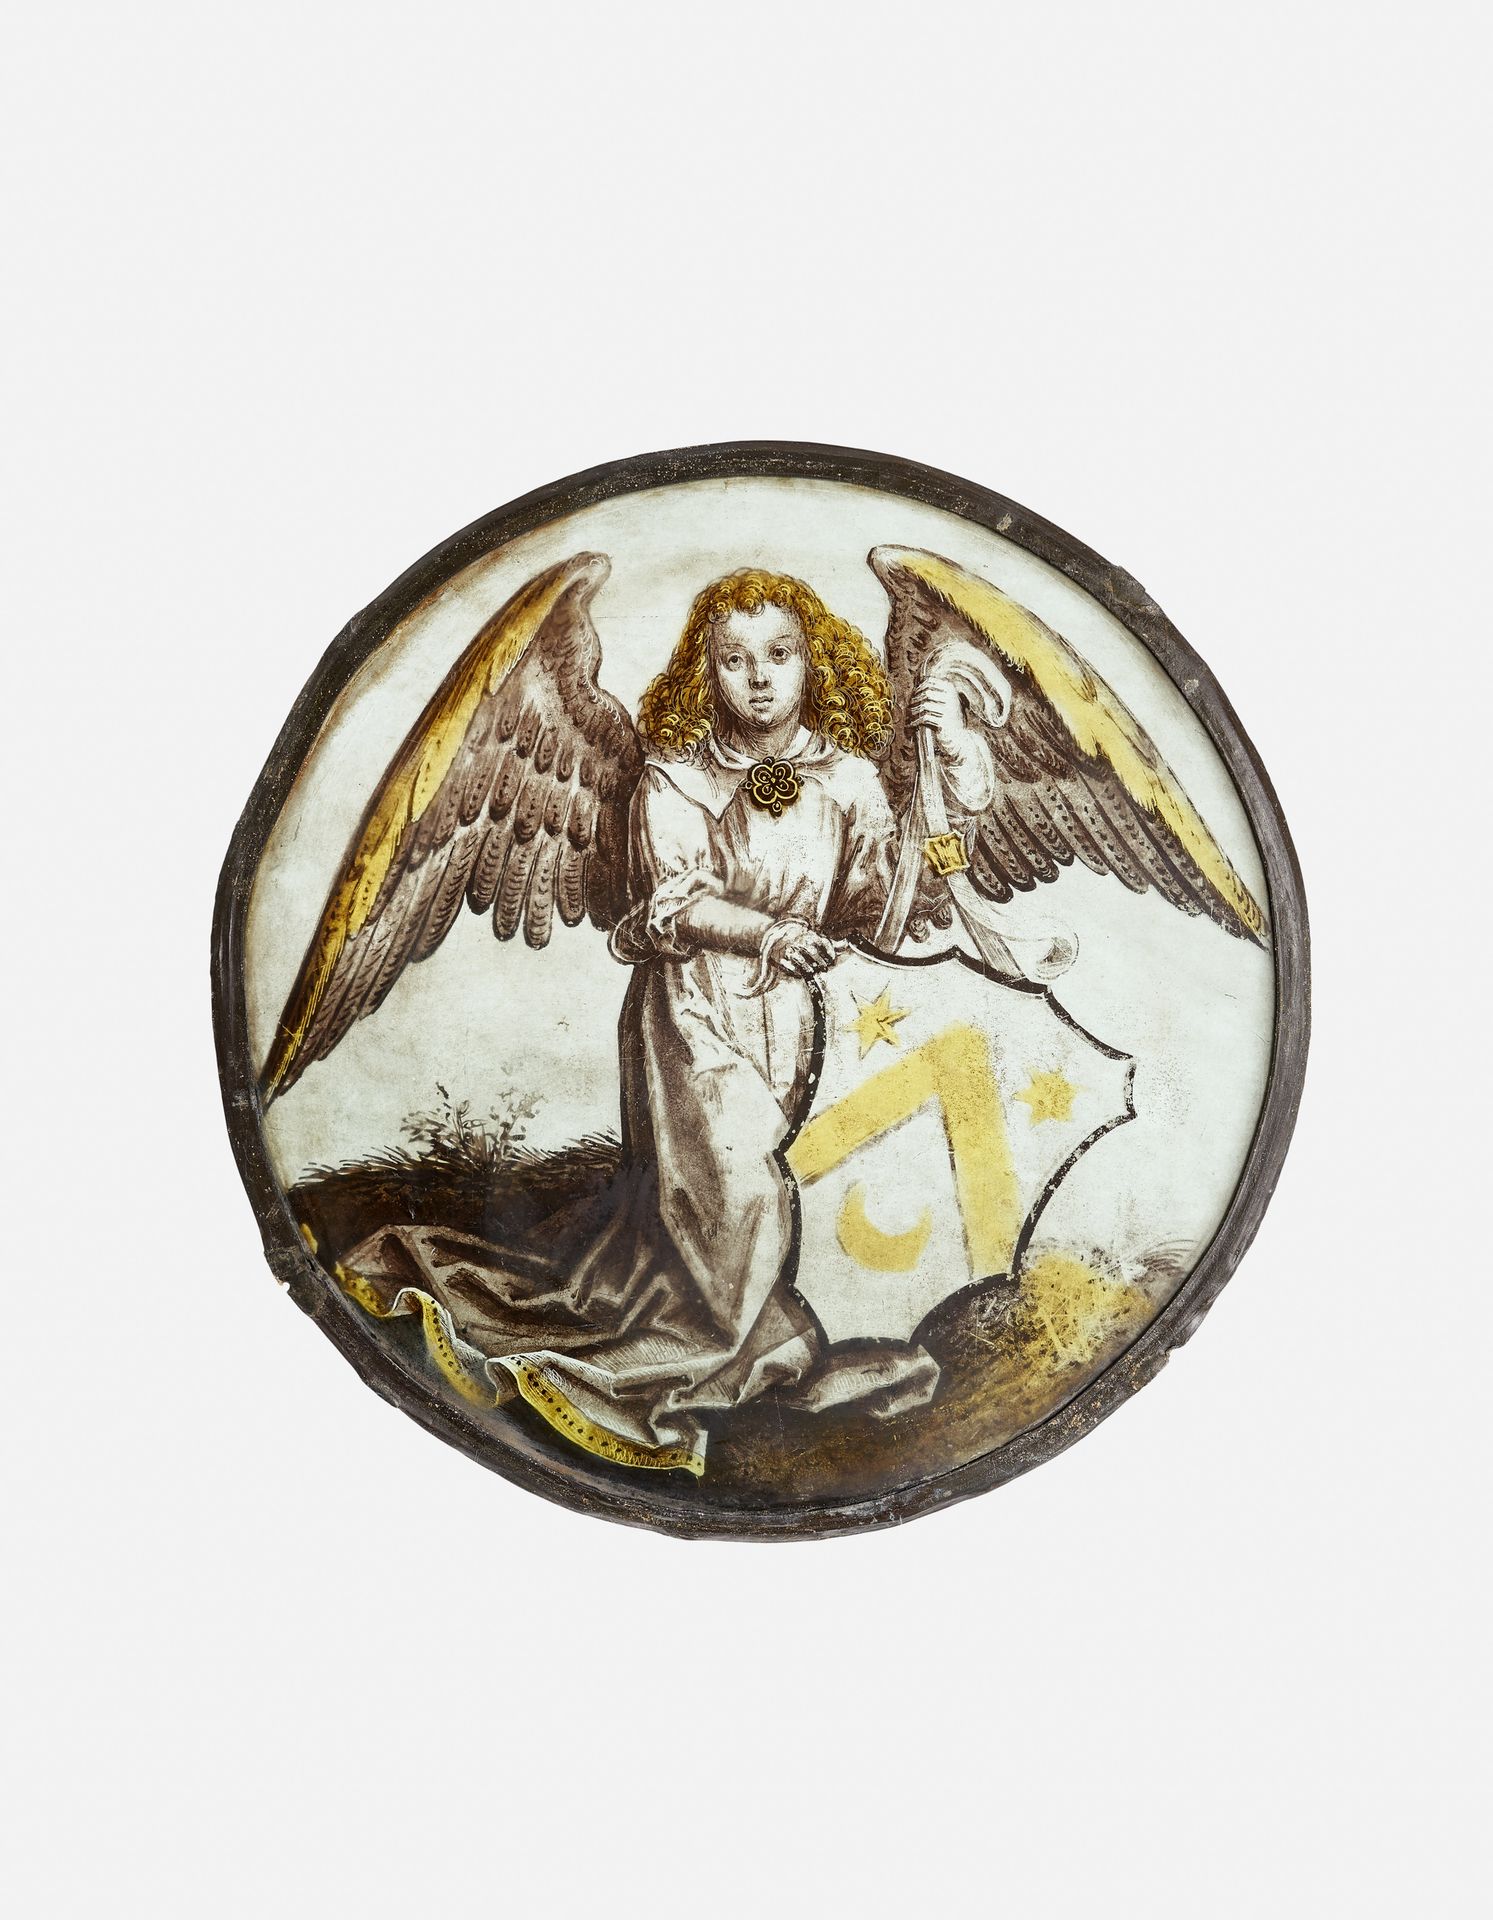 Null 罗德尔

荷兰南部，布鲁日，15世纪

银色，饰有盾牌天使。

直径：21,5厘米